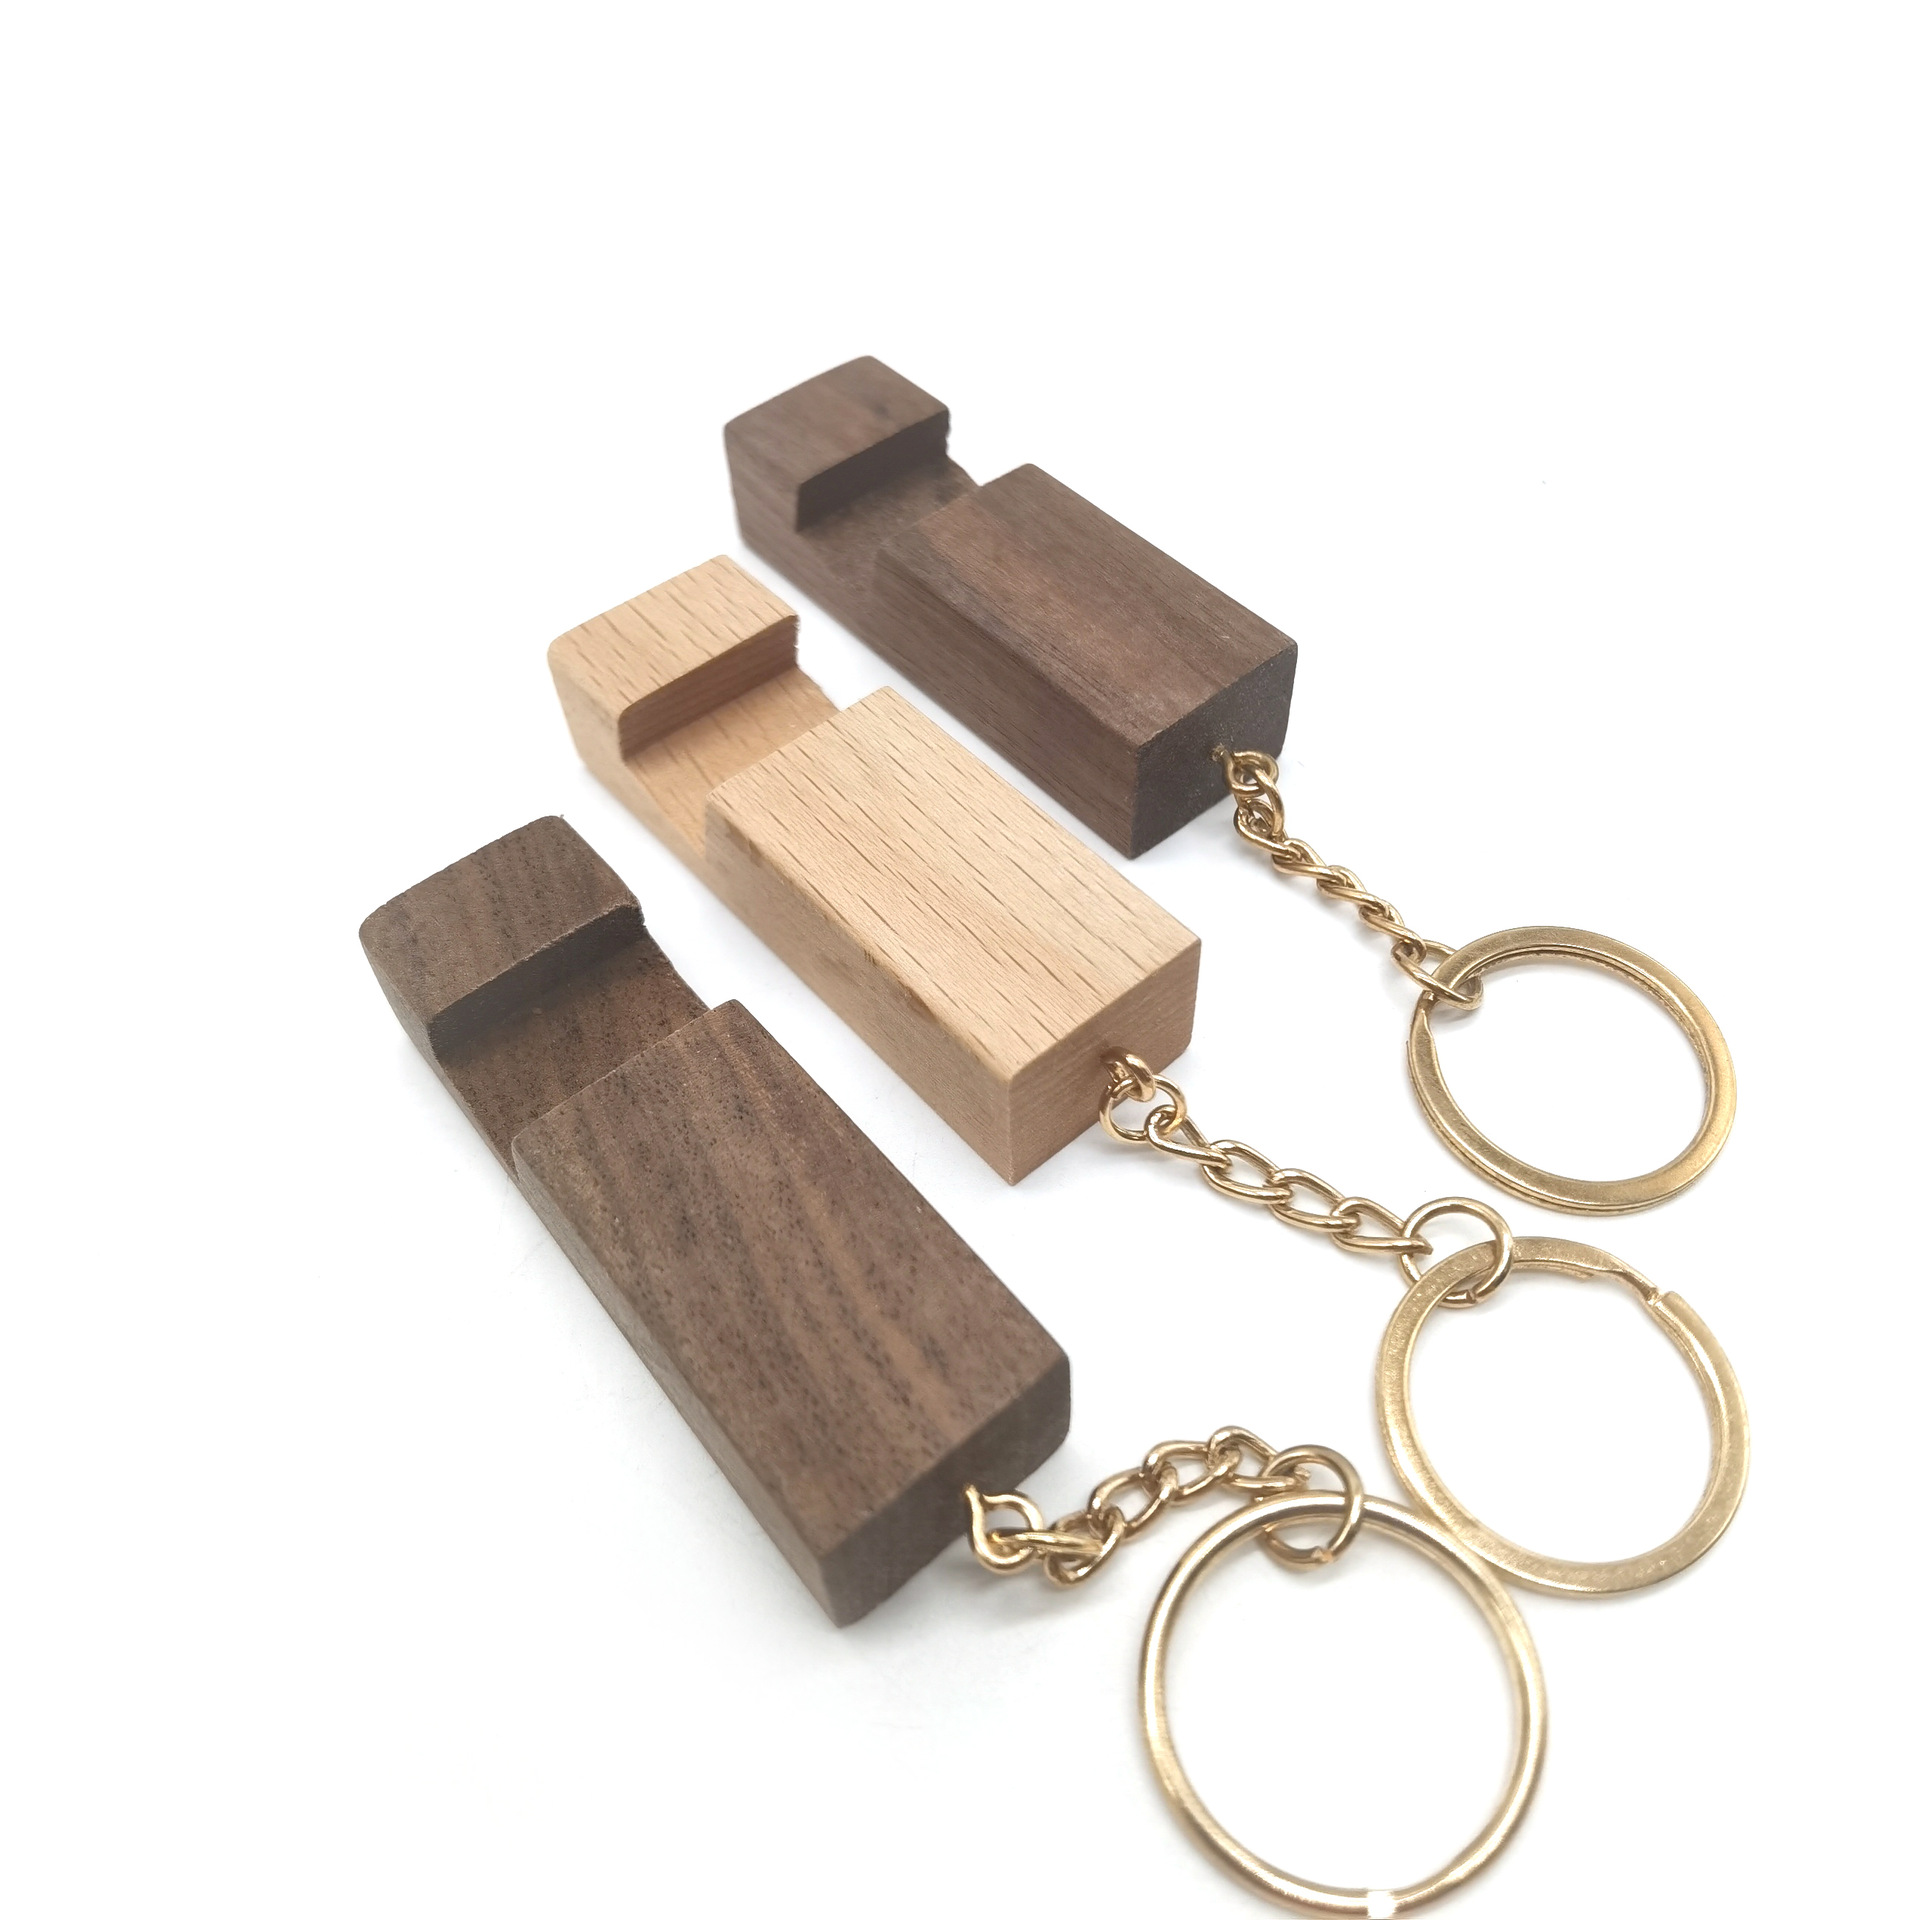 Mini wooden mobile phone rack